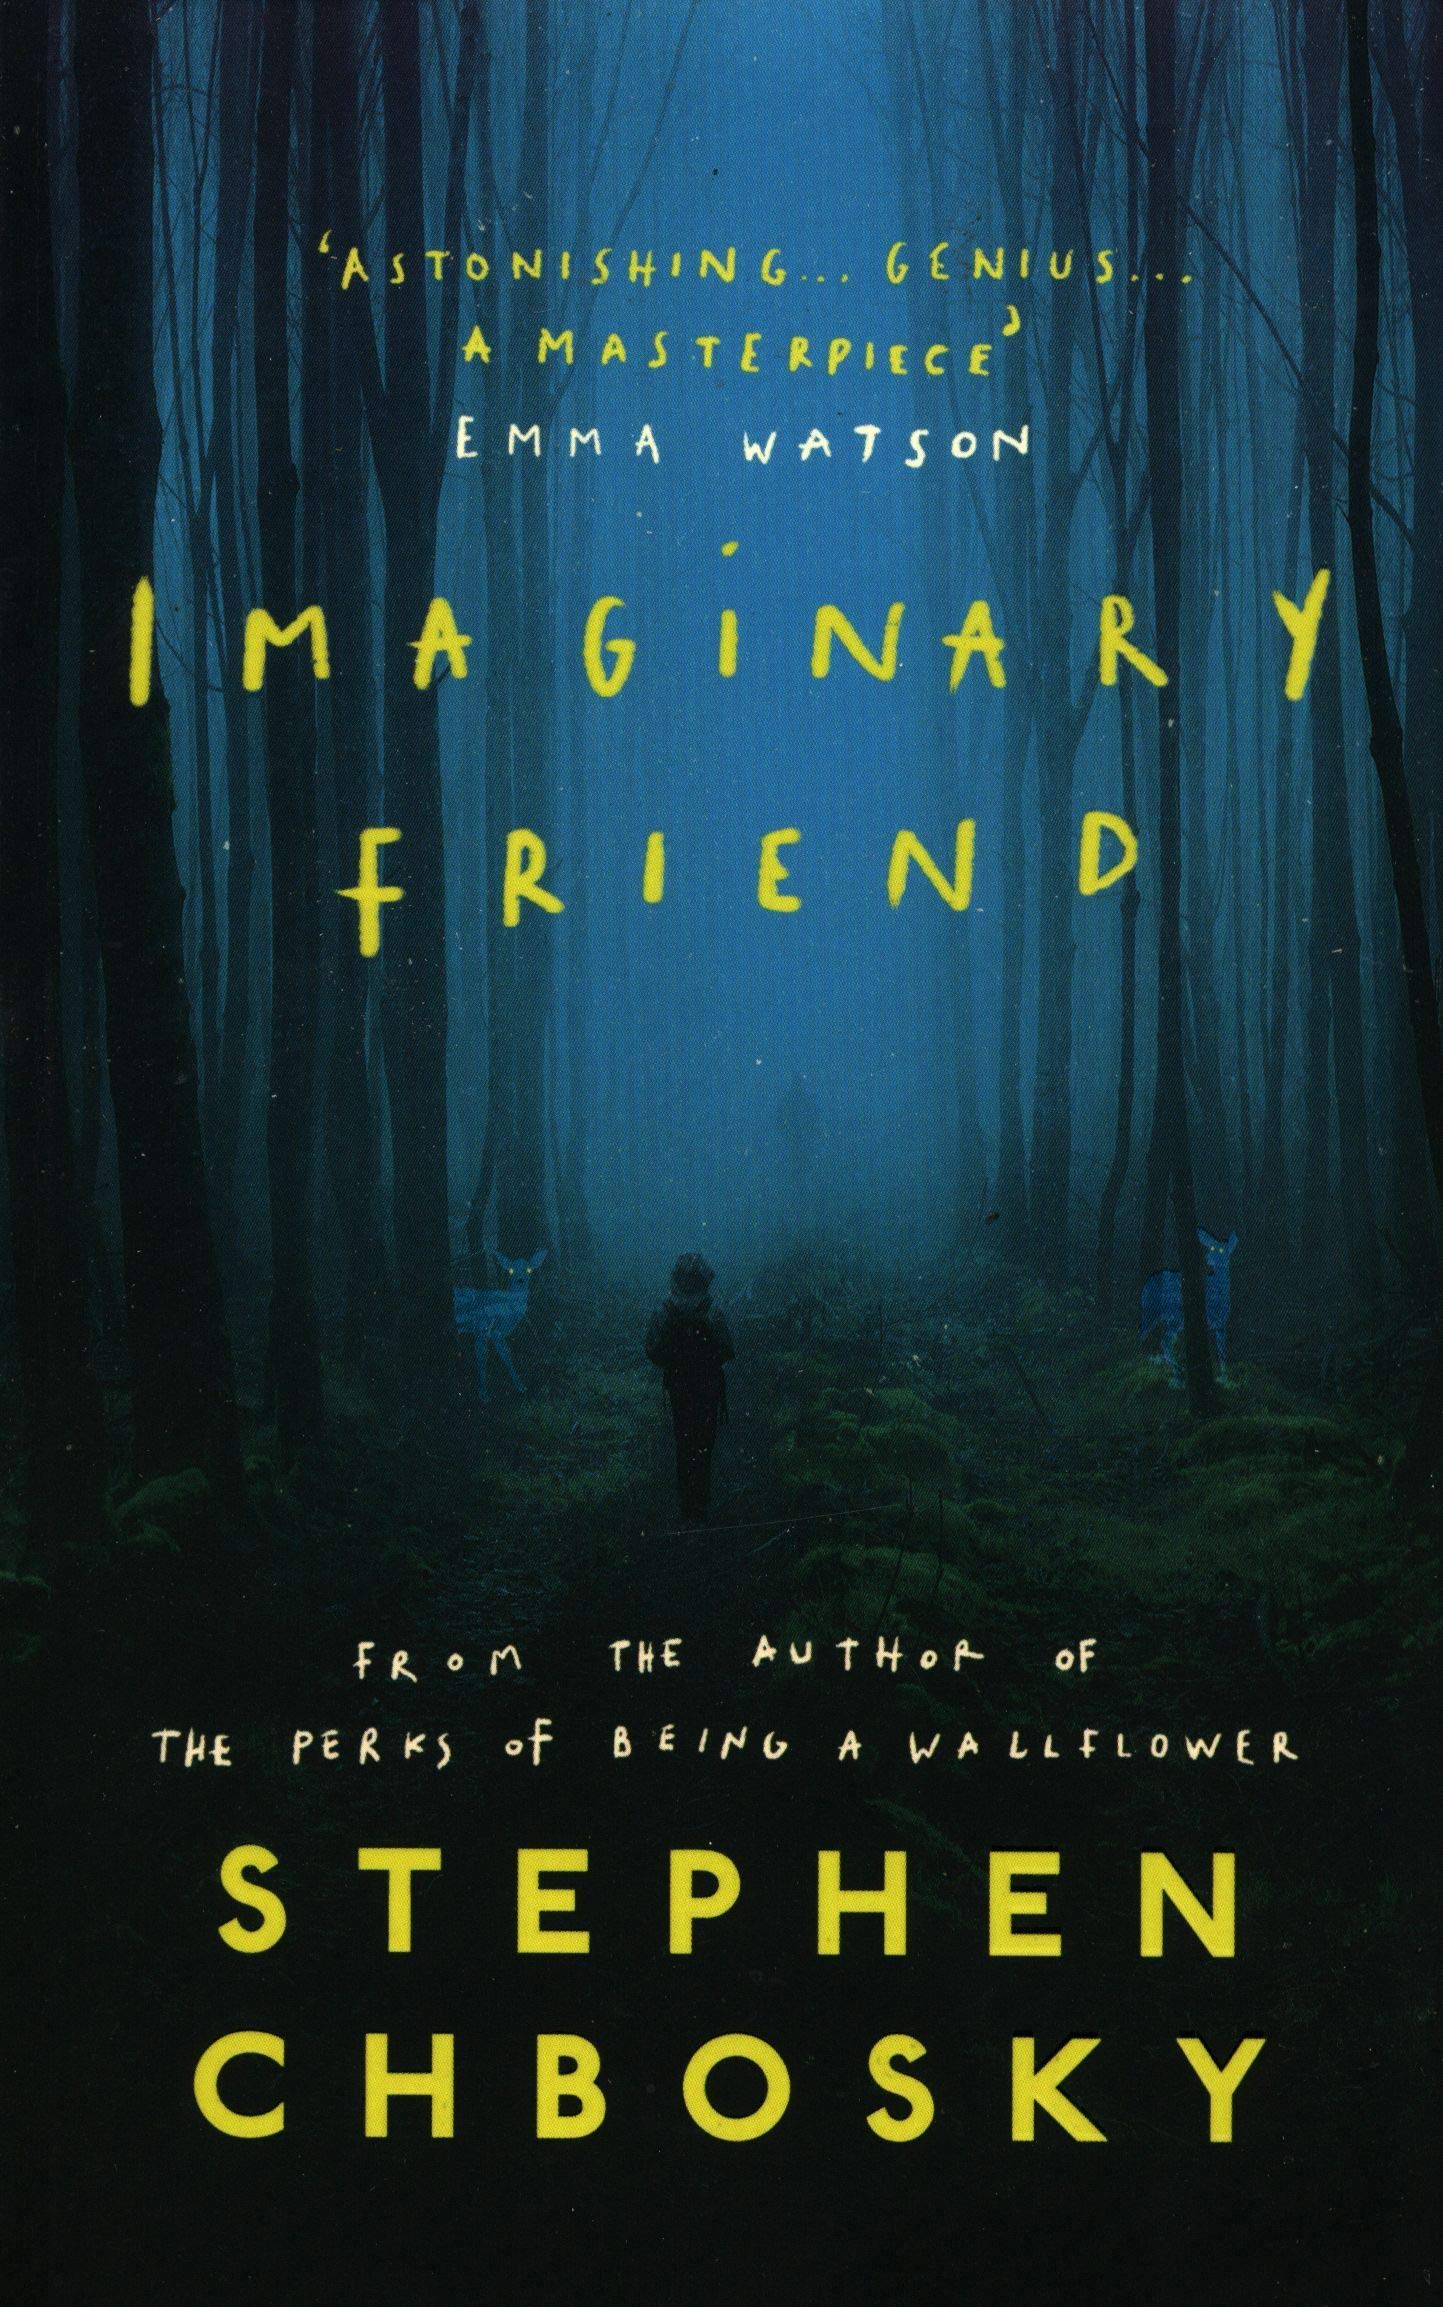 imaginary friend by stephen chbosky